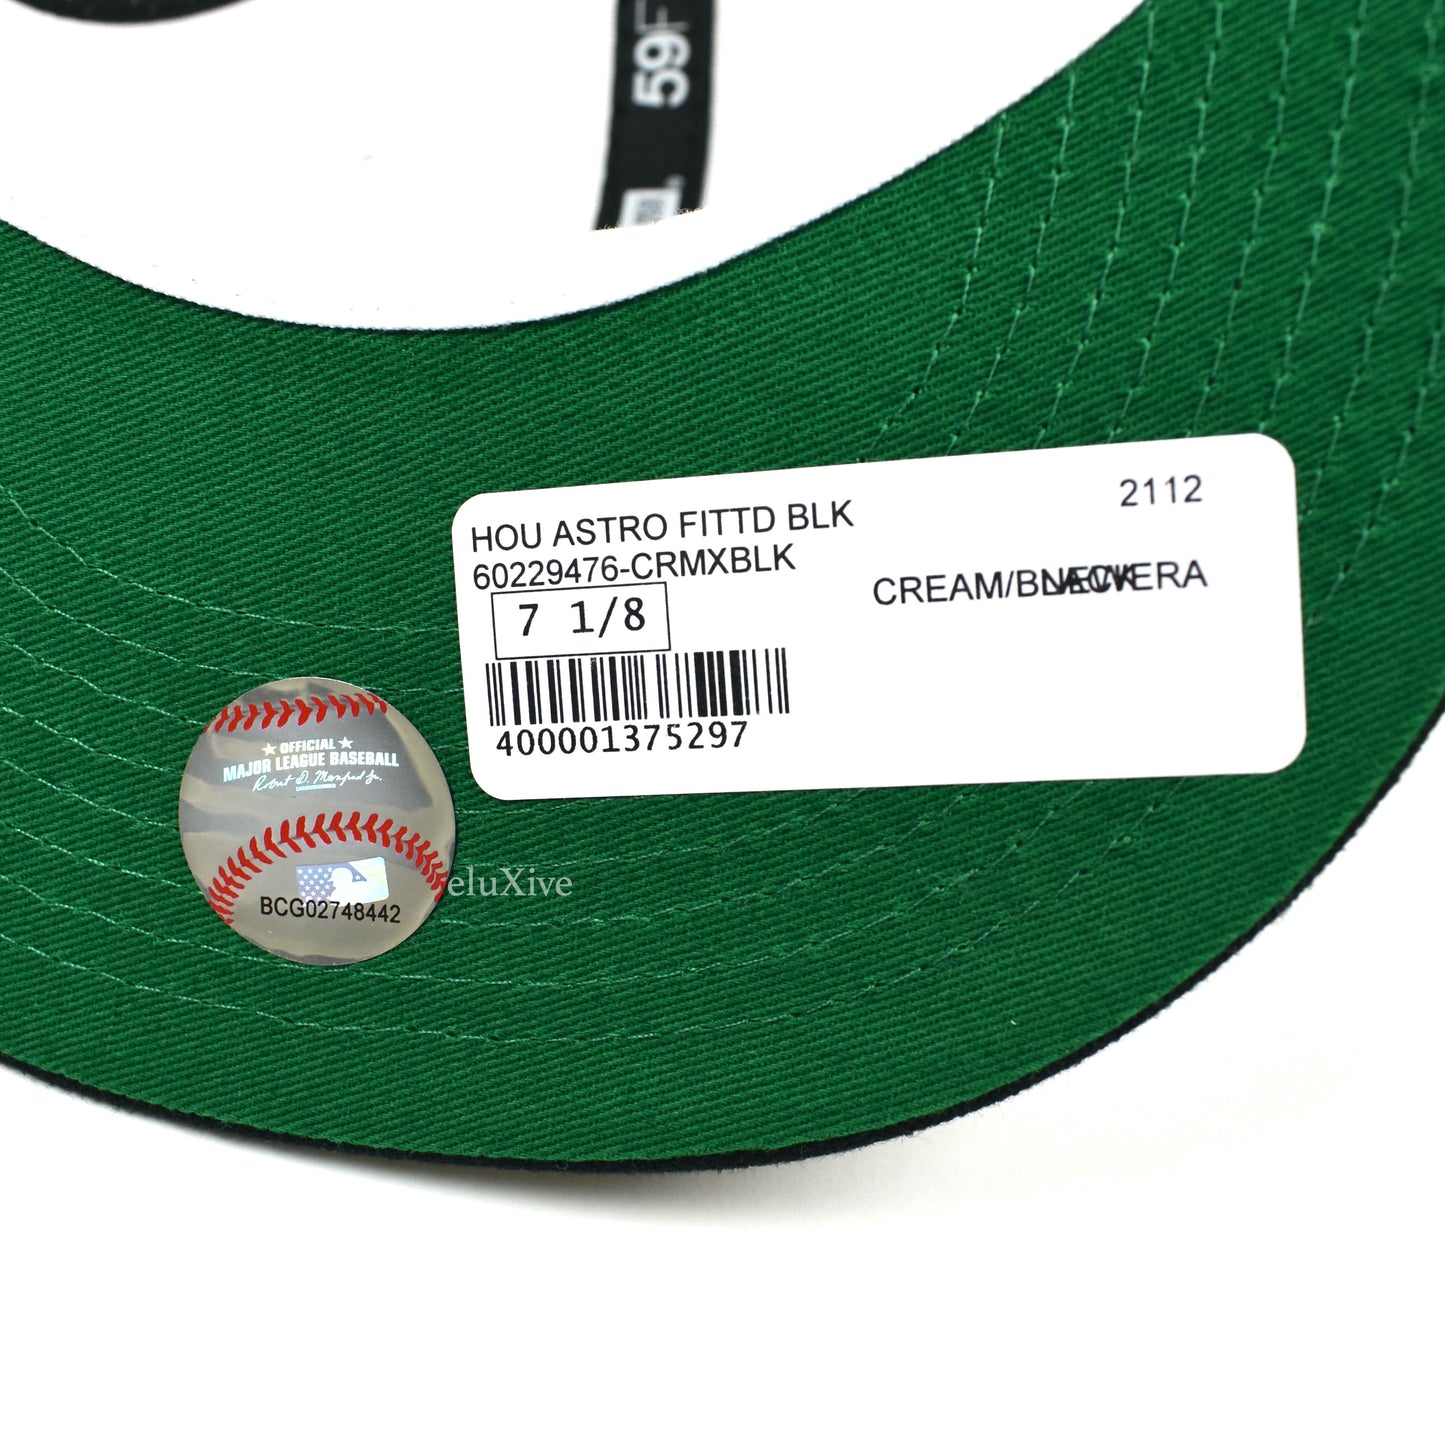 A Ma Maniere x New Era - Houston Astros Fitted Hat (Black Bill)